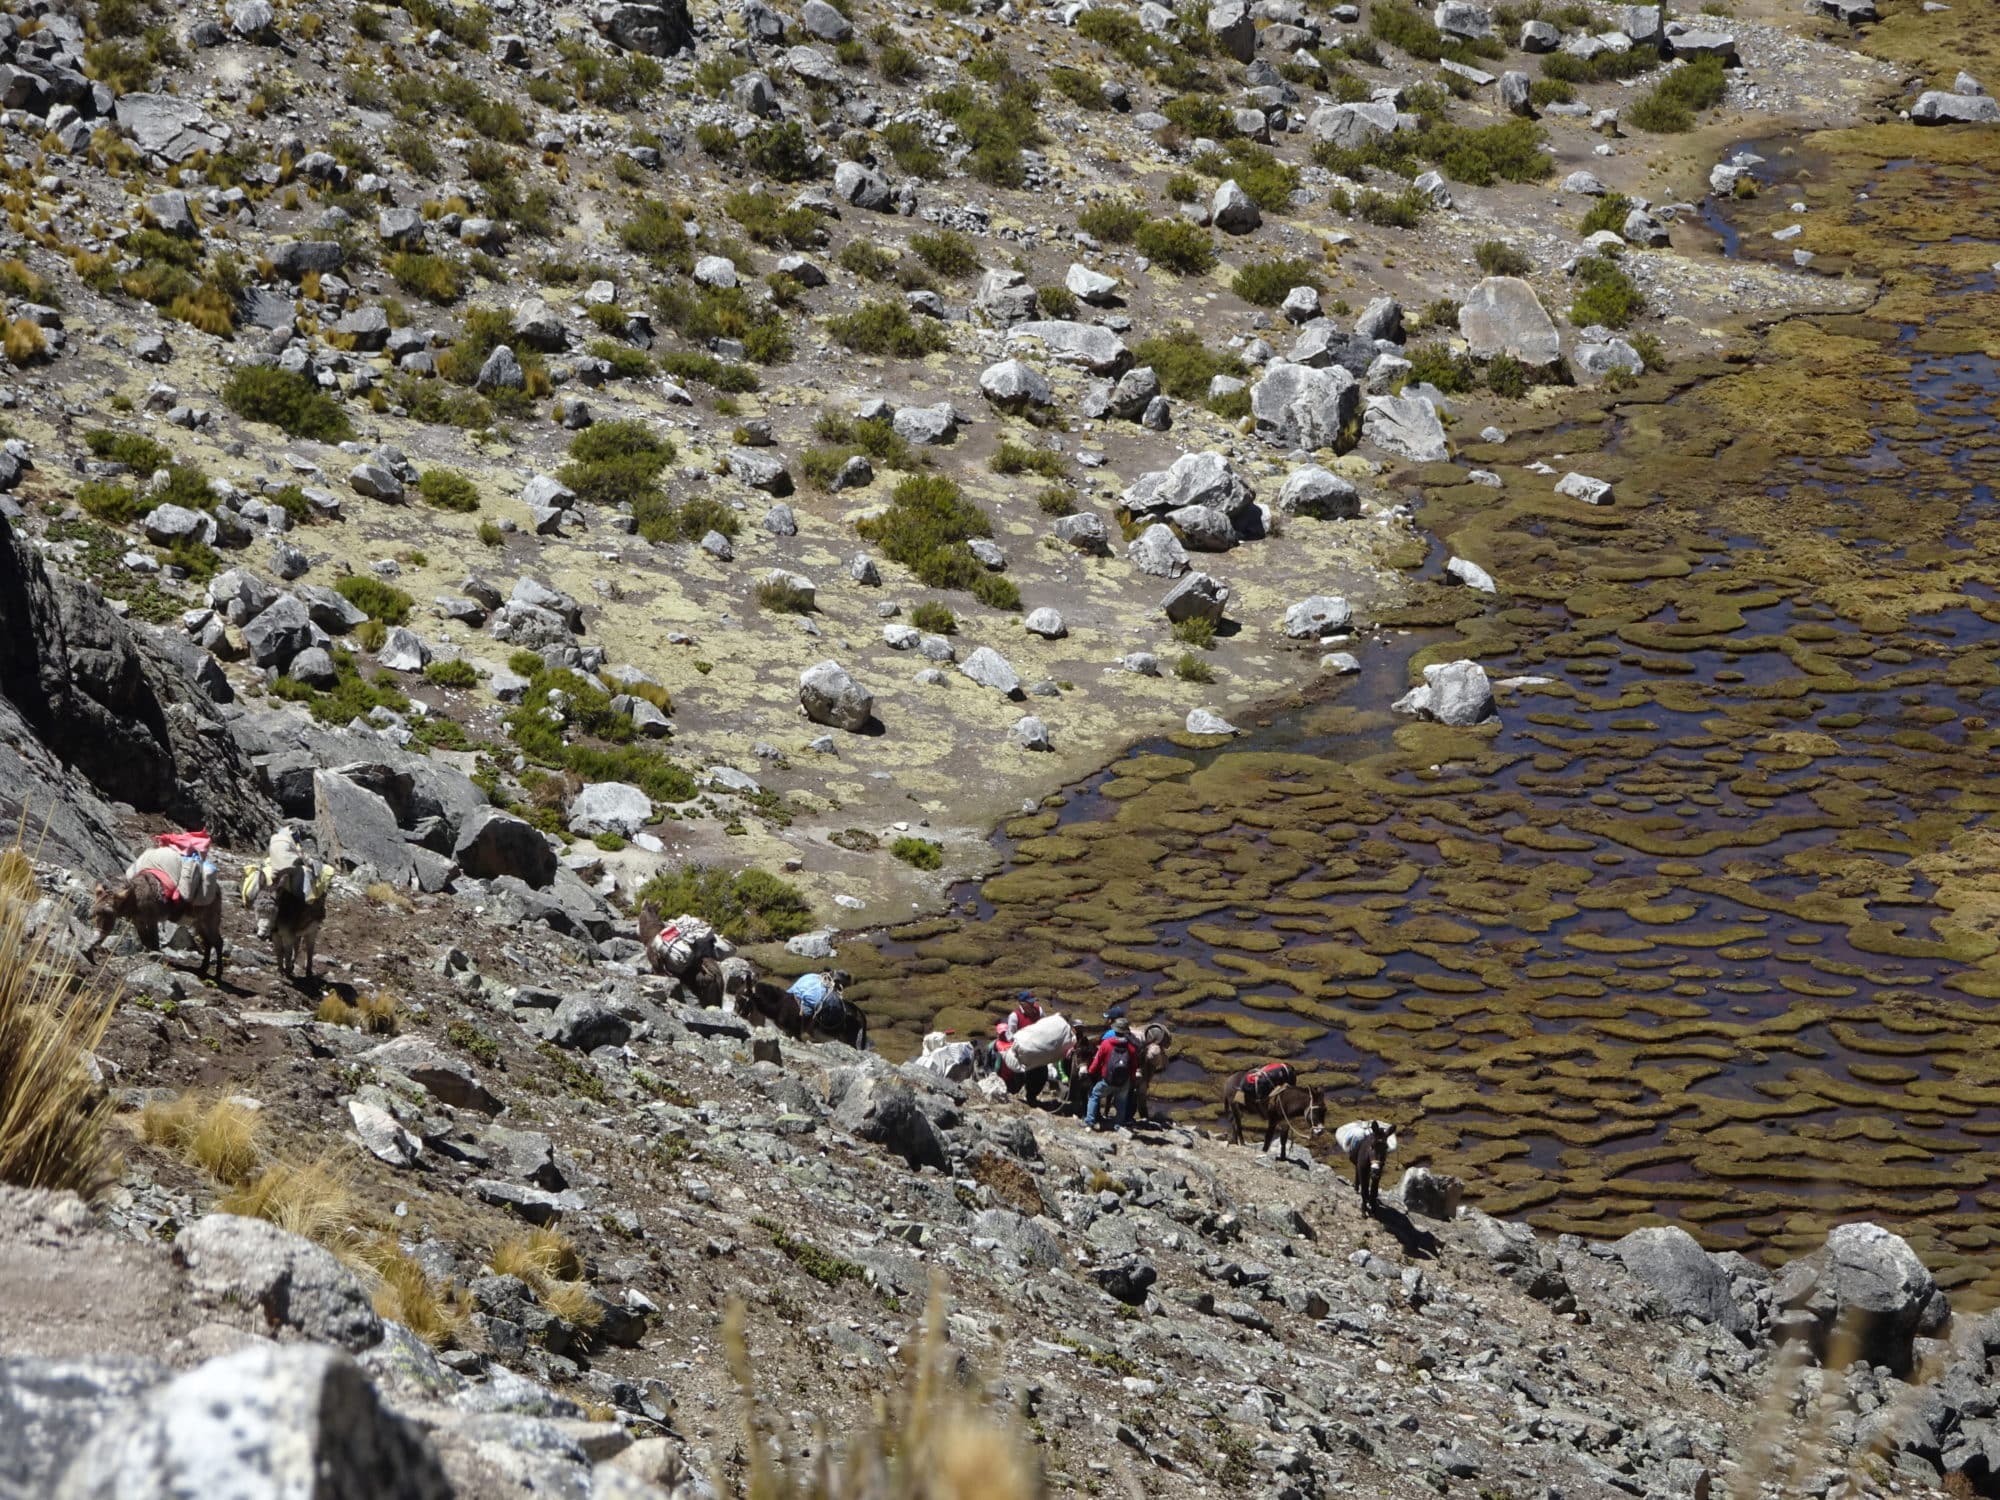 Bolivie, montée au camp 1 du Chachacomani. carrard xavier